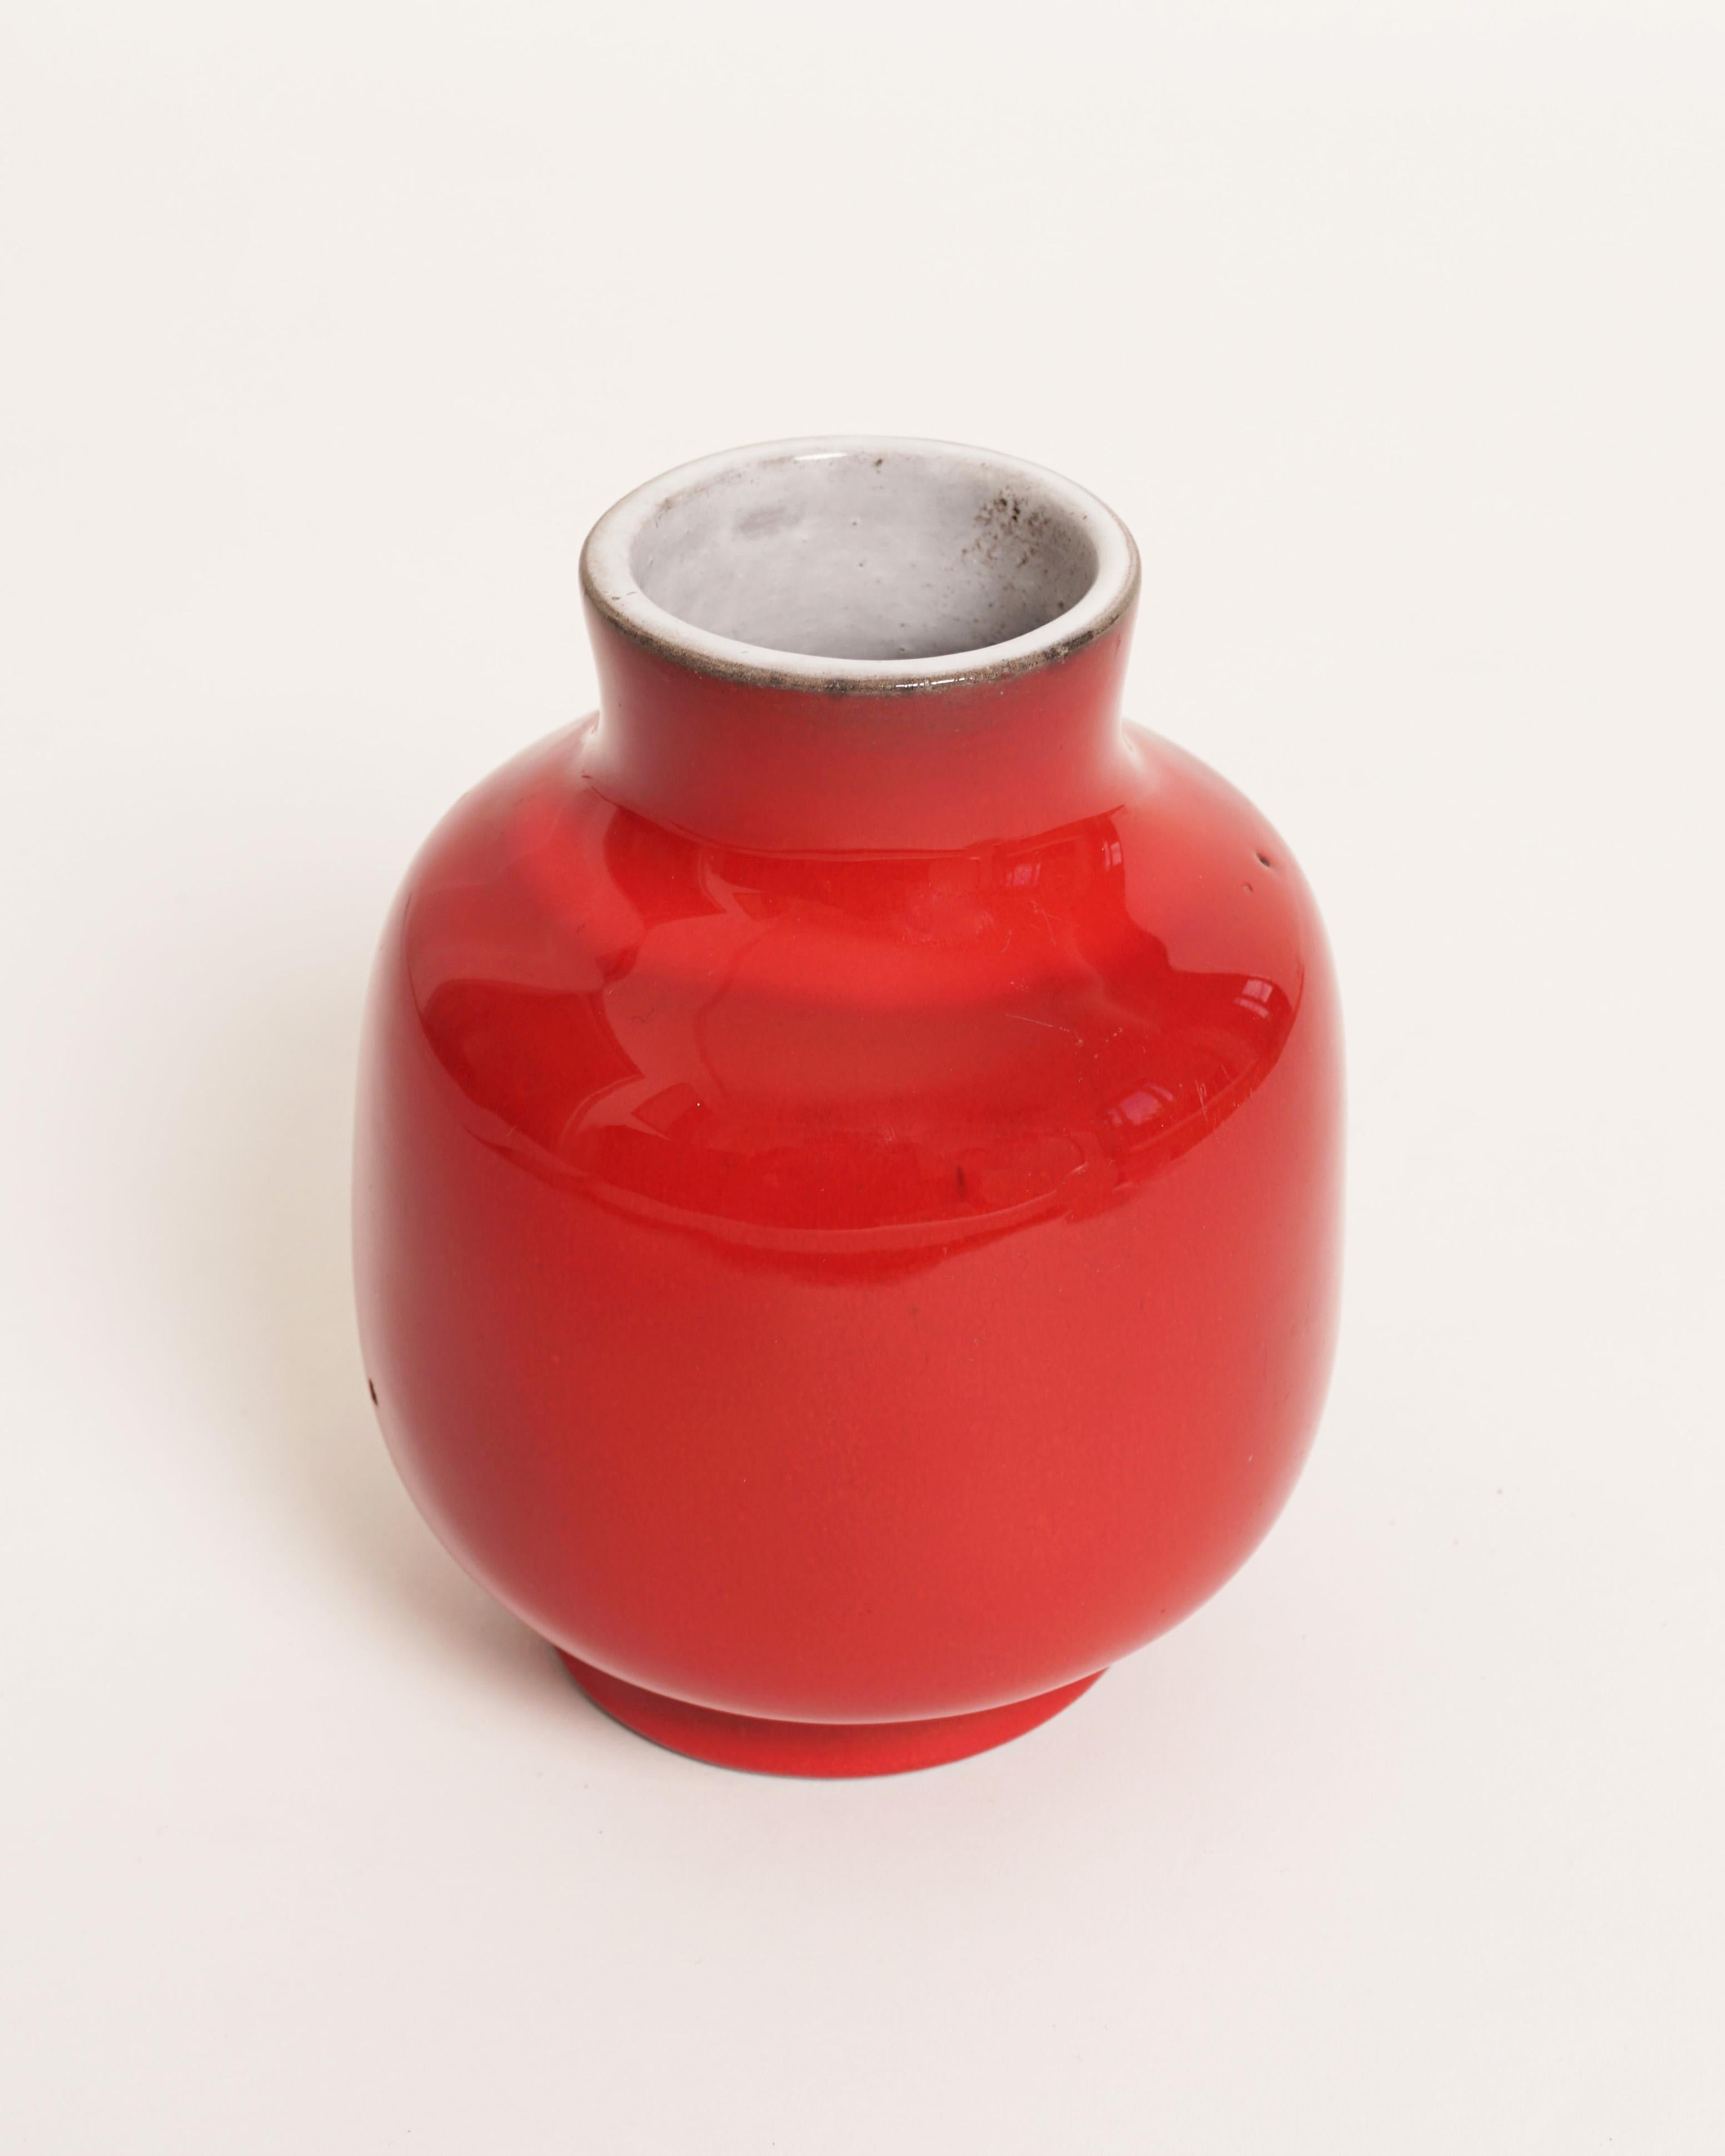 Jacques and Dani Ruelland
'Japanese Vase', c. 1970
Execution: Ceramic, red
Signed: Ruelland
H : 15.5 cm (5.9